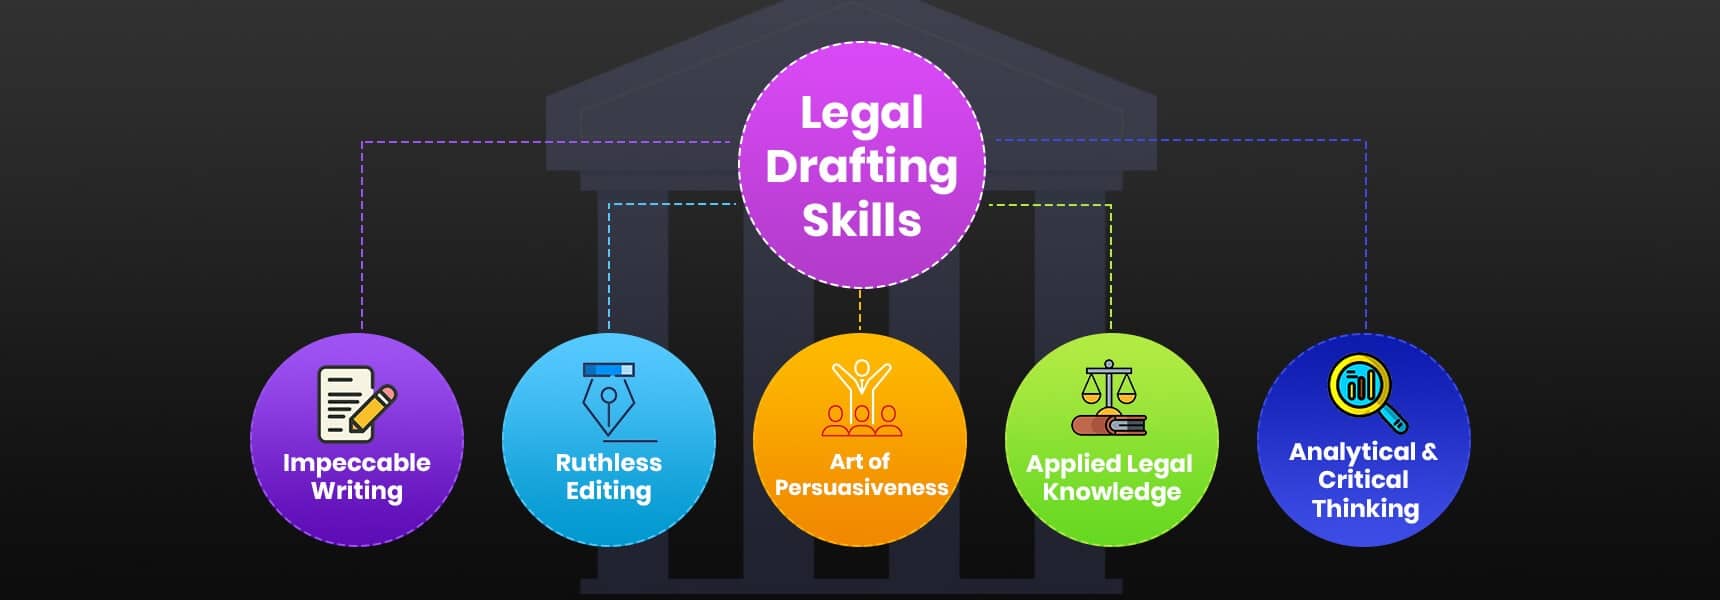 Legal Drafting Skills